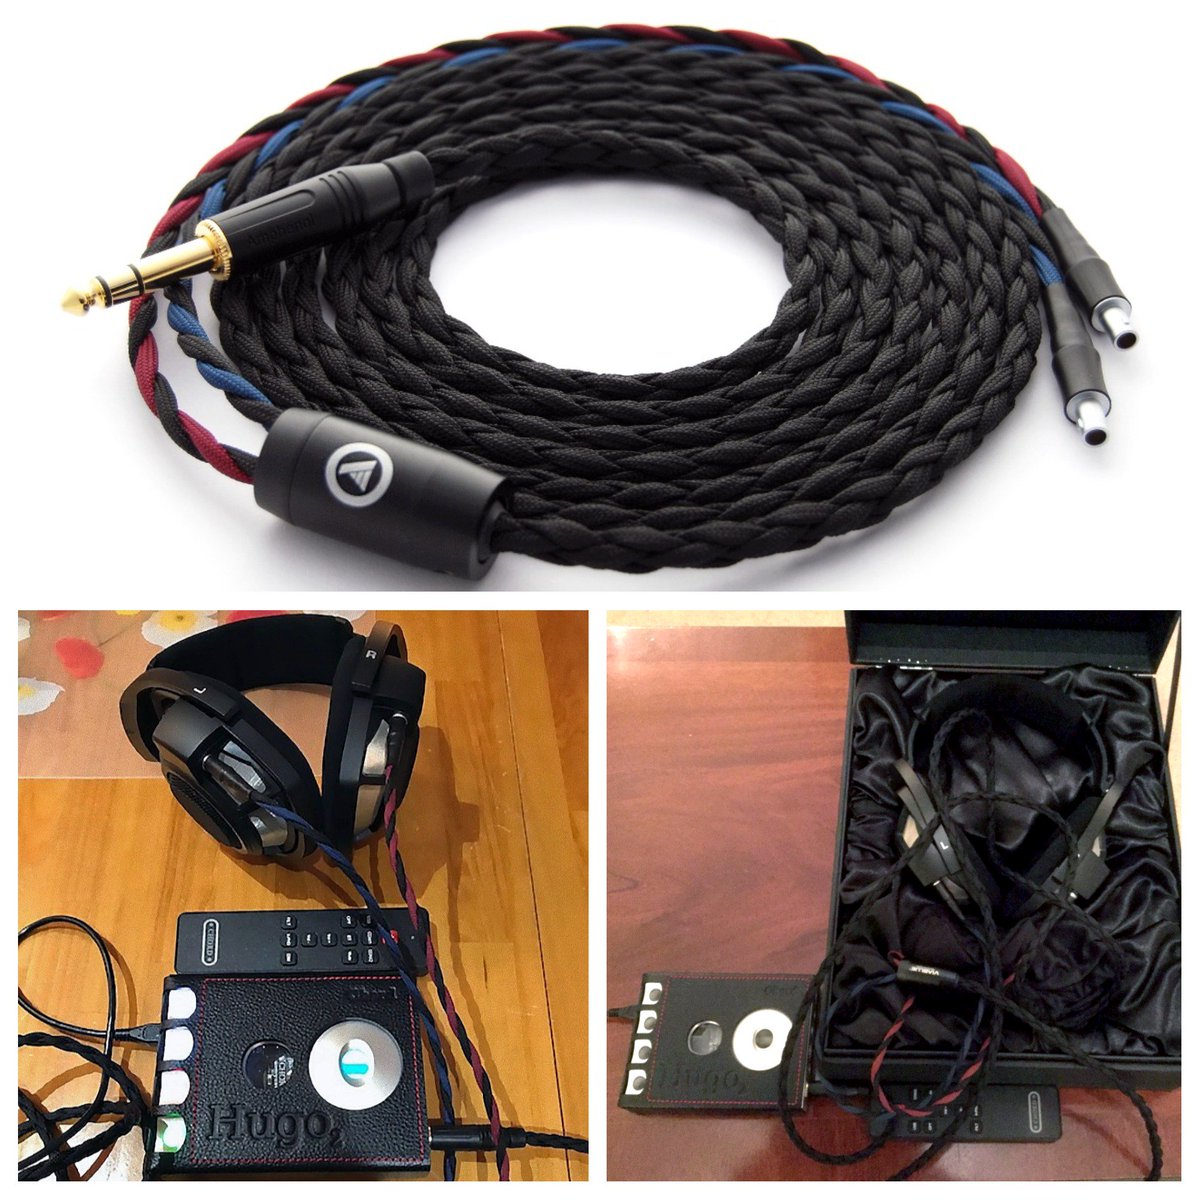 Custom Dark Mongrel cable for HD800 S to Chord Hugo 2, with 6.35mm Amphenol jack and ViaBlue splitter. #sennheiserhd800s #sennheiser #hd800s #hd800 #chordelectronics #chordhugo2 #chordhugo #viablue #sennheiserhd800 #customheadphones #highendaudio #highfidelity #audiophile #headfi